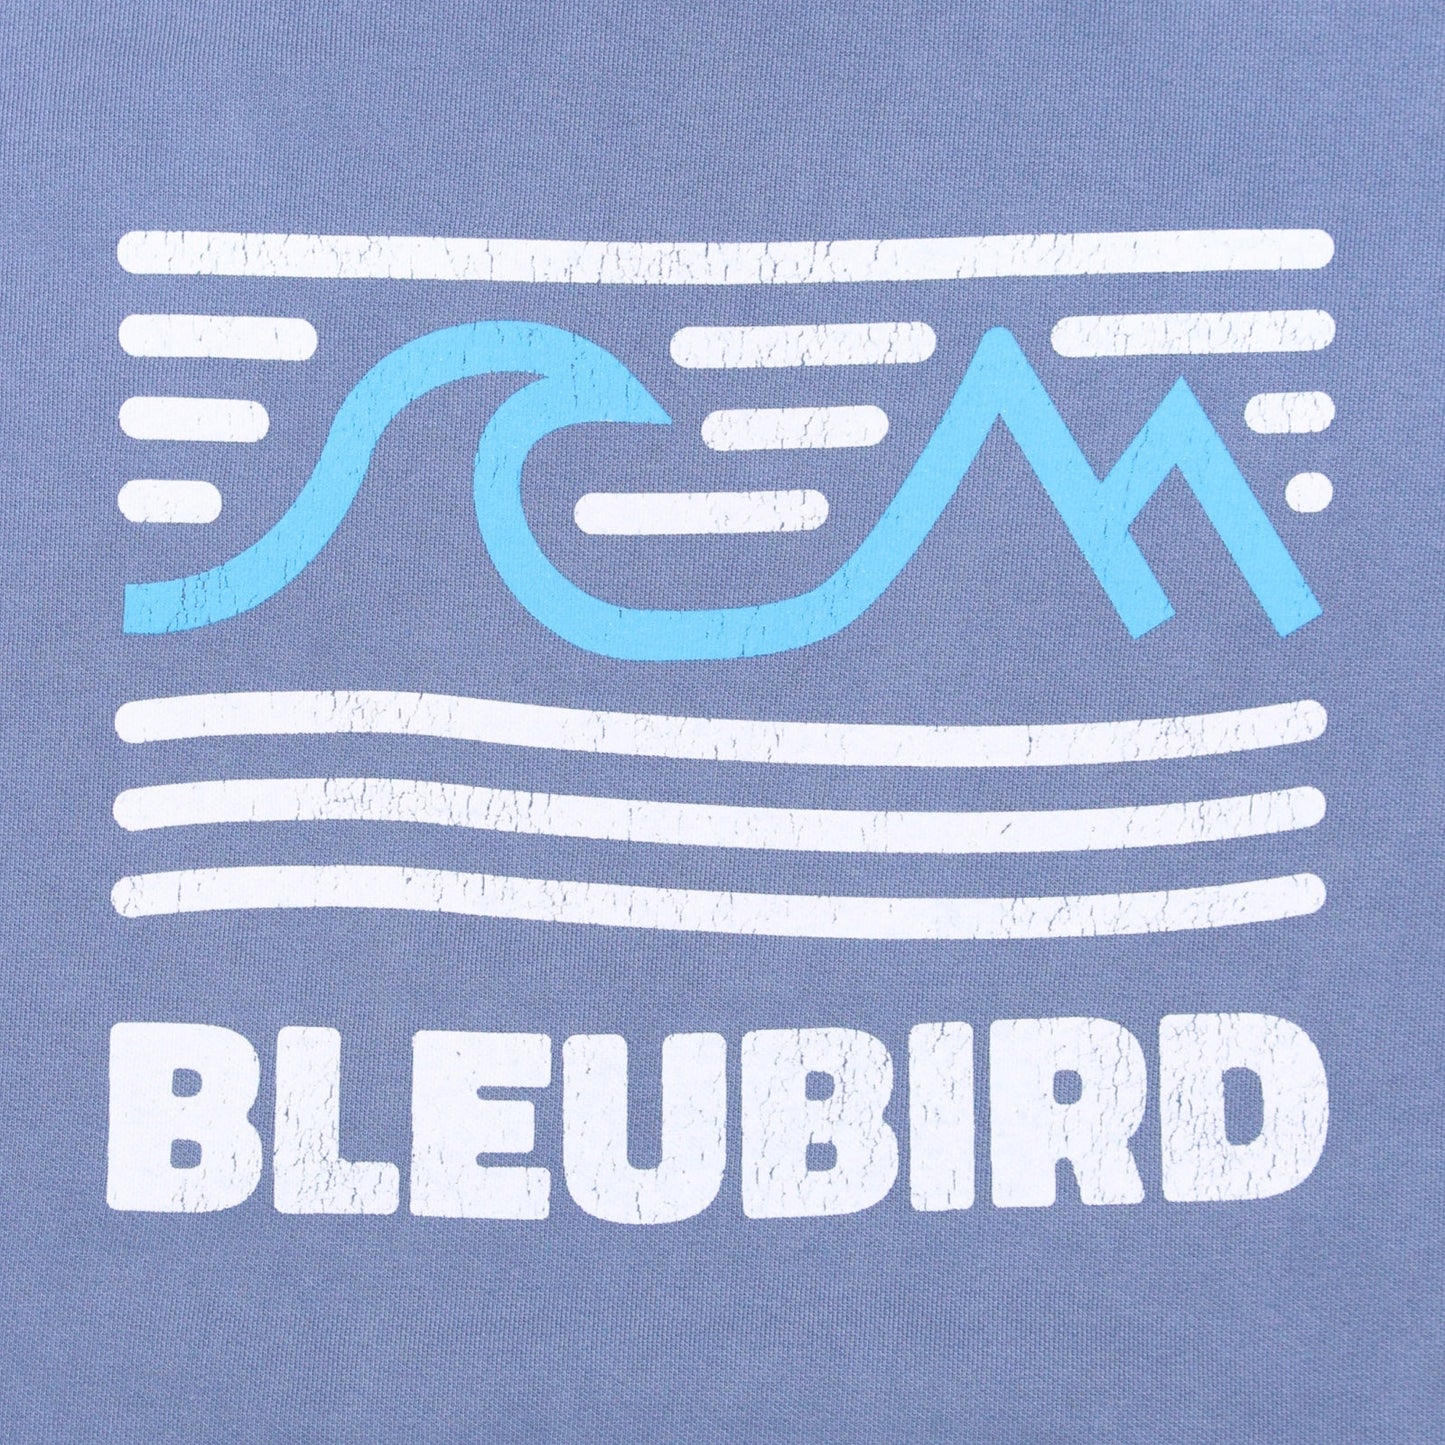 Bleubird Tides Hoodie - Sky